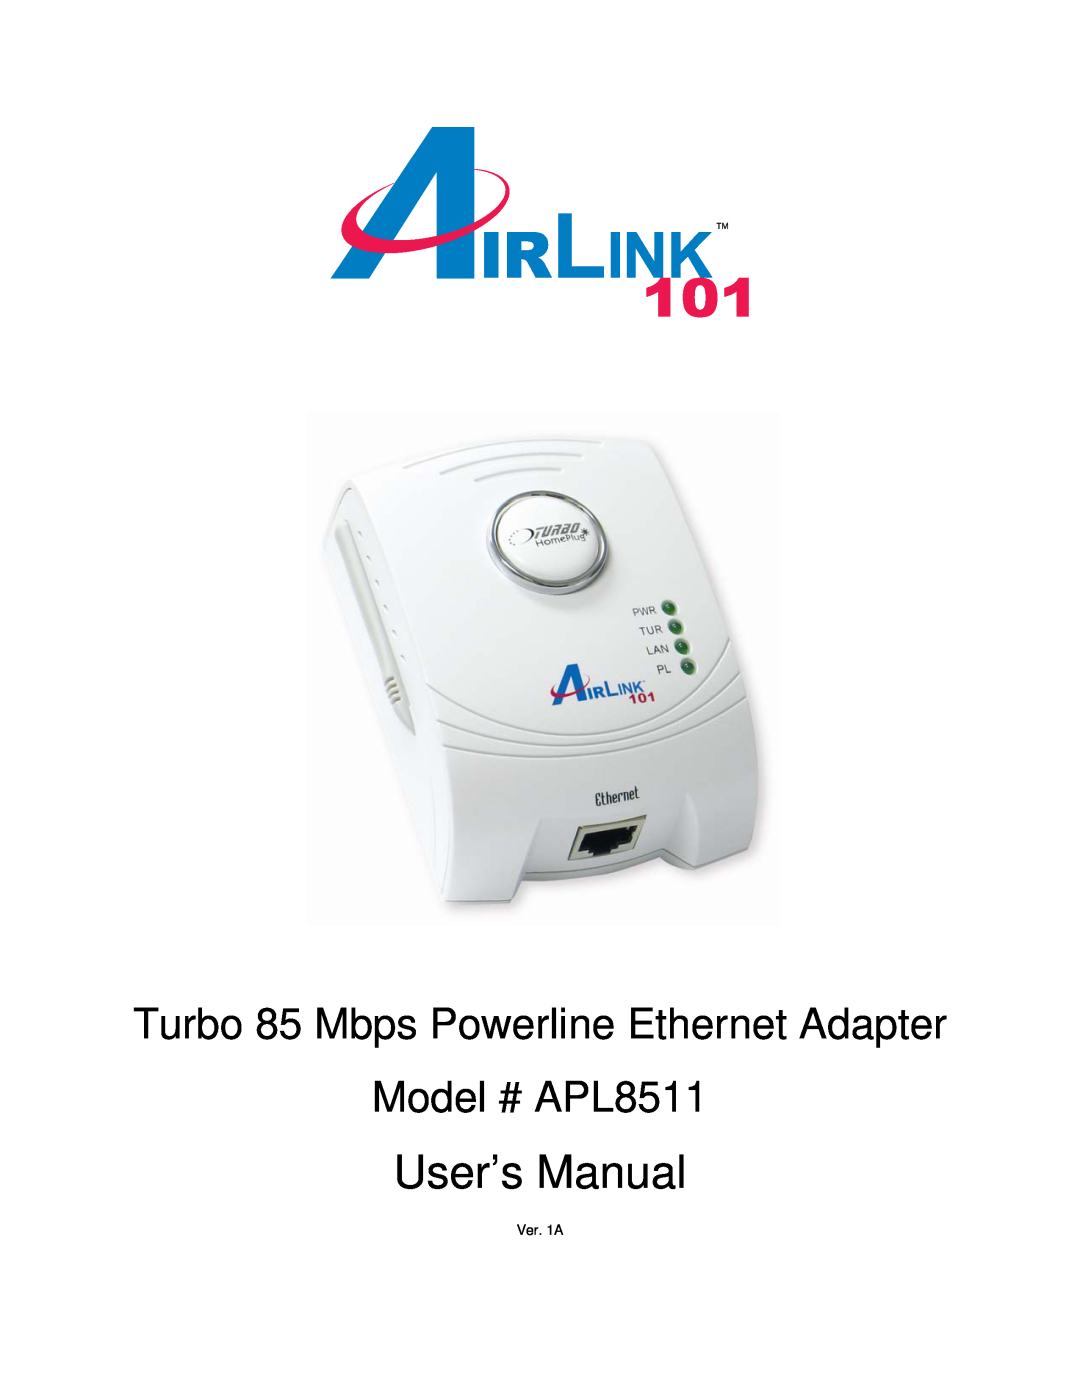 Airlink101 user manual User’s Manual, Turbo 85 Mbps Powerline Ethernet Adapter, Model # APL8511, Ver. 1A 